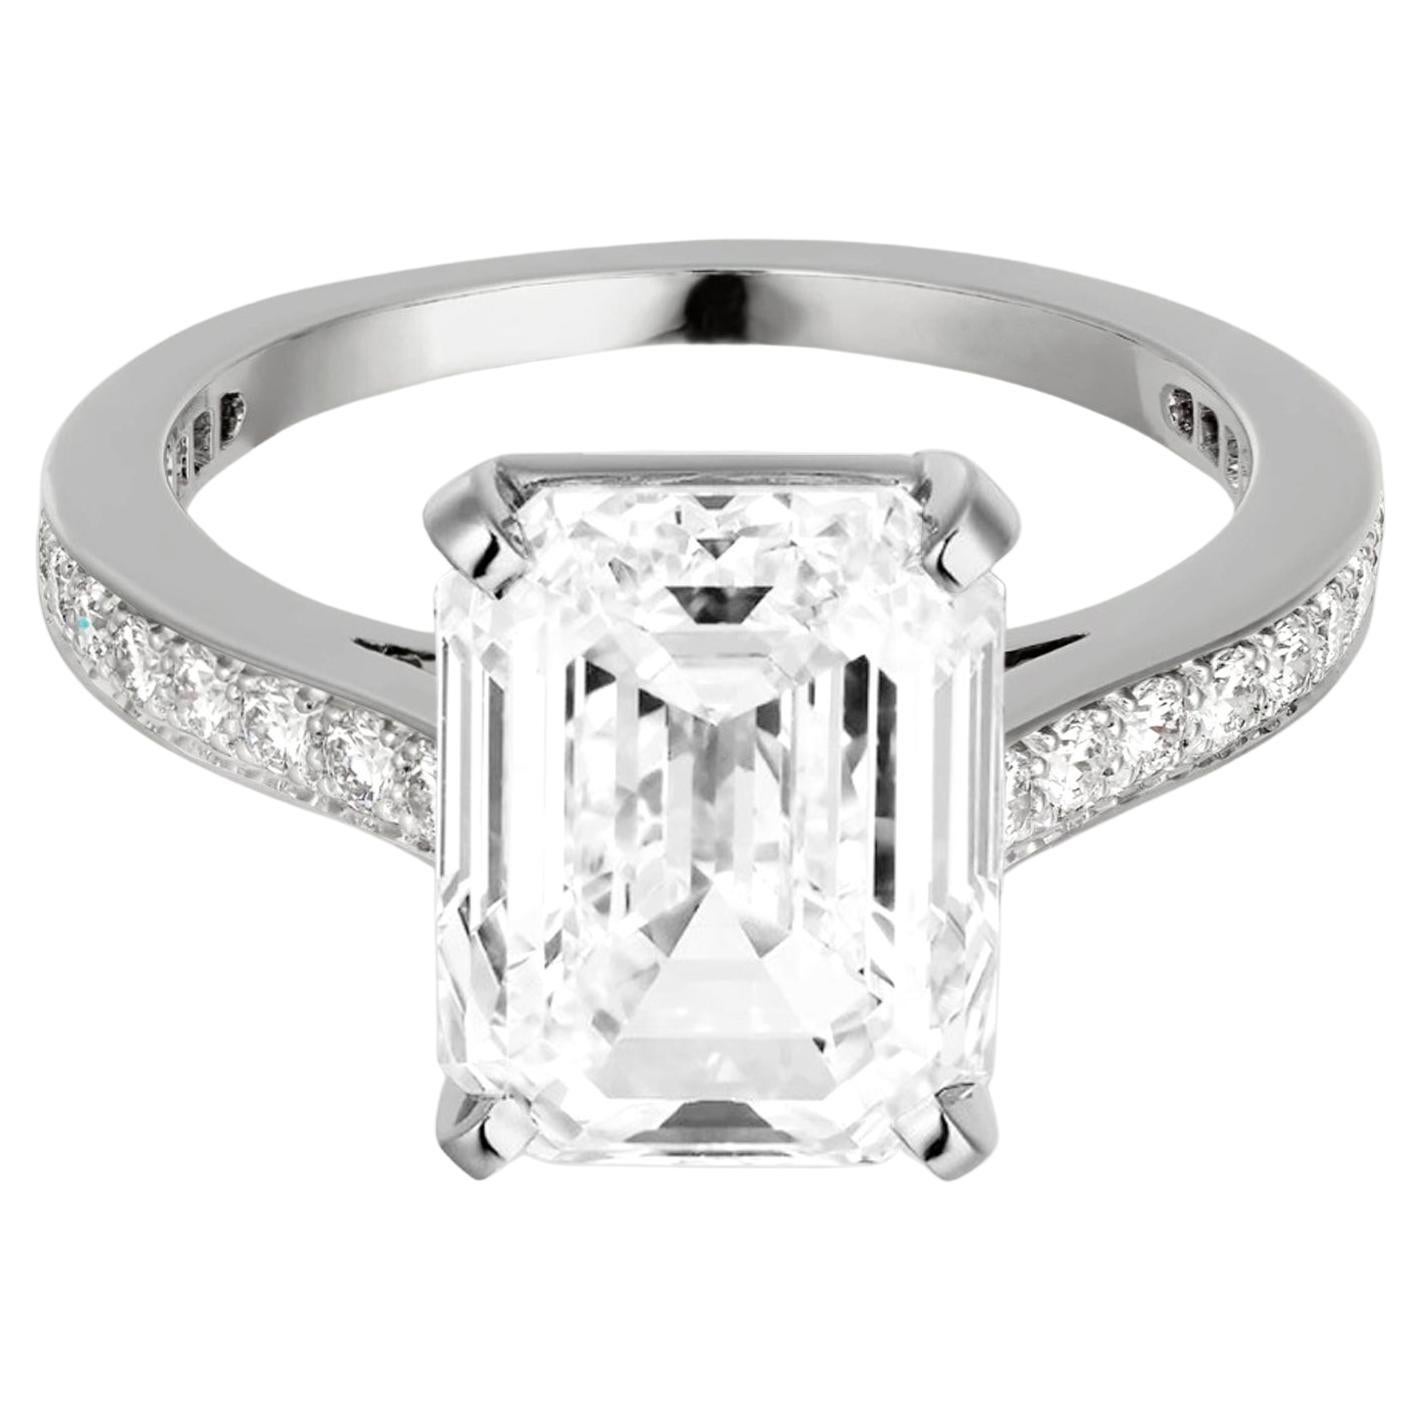 CRN4765600 - Panthère de Cartier ring - White gold, emeralds, onyx, diamonds  - Cartier